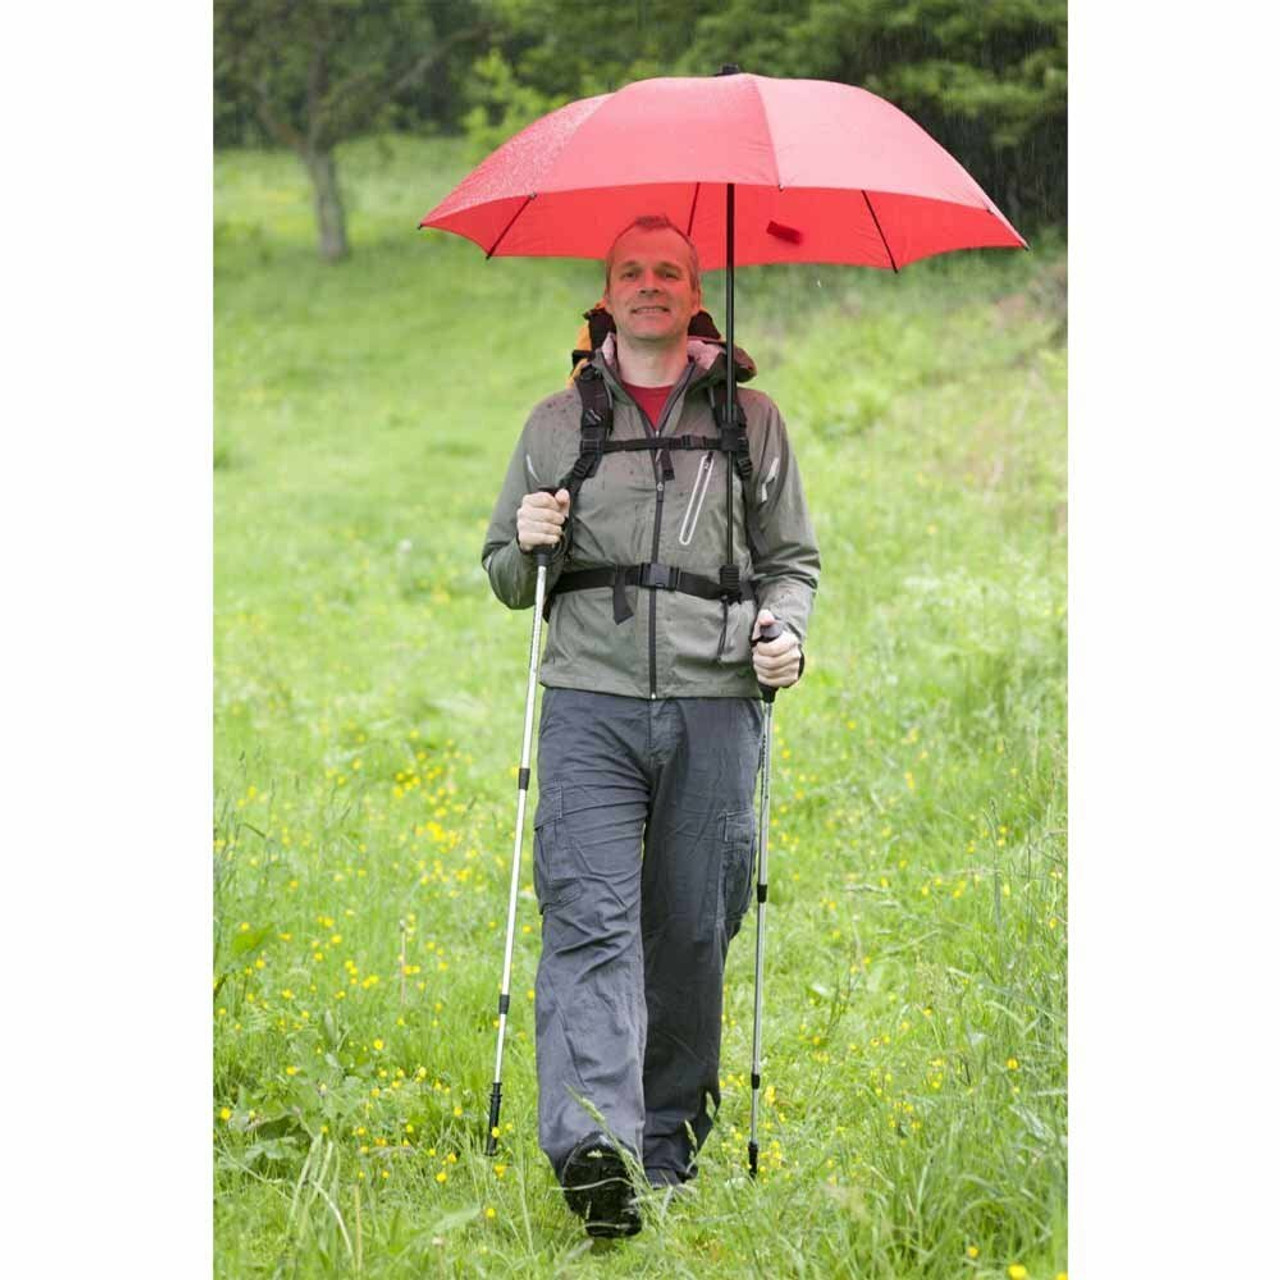 EuroSCHIRM Hands free trekking umbrella, Product Review